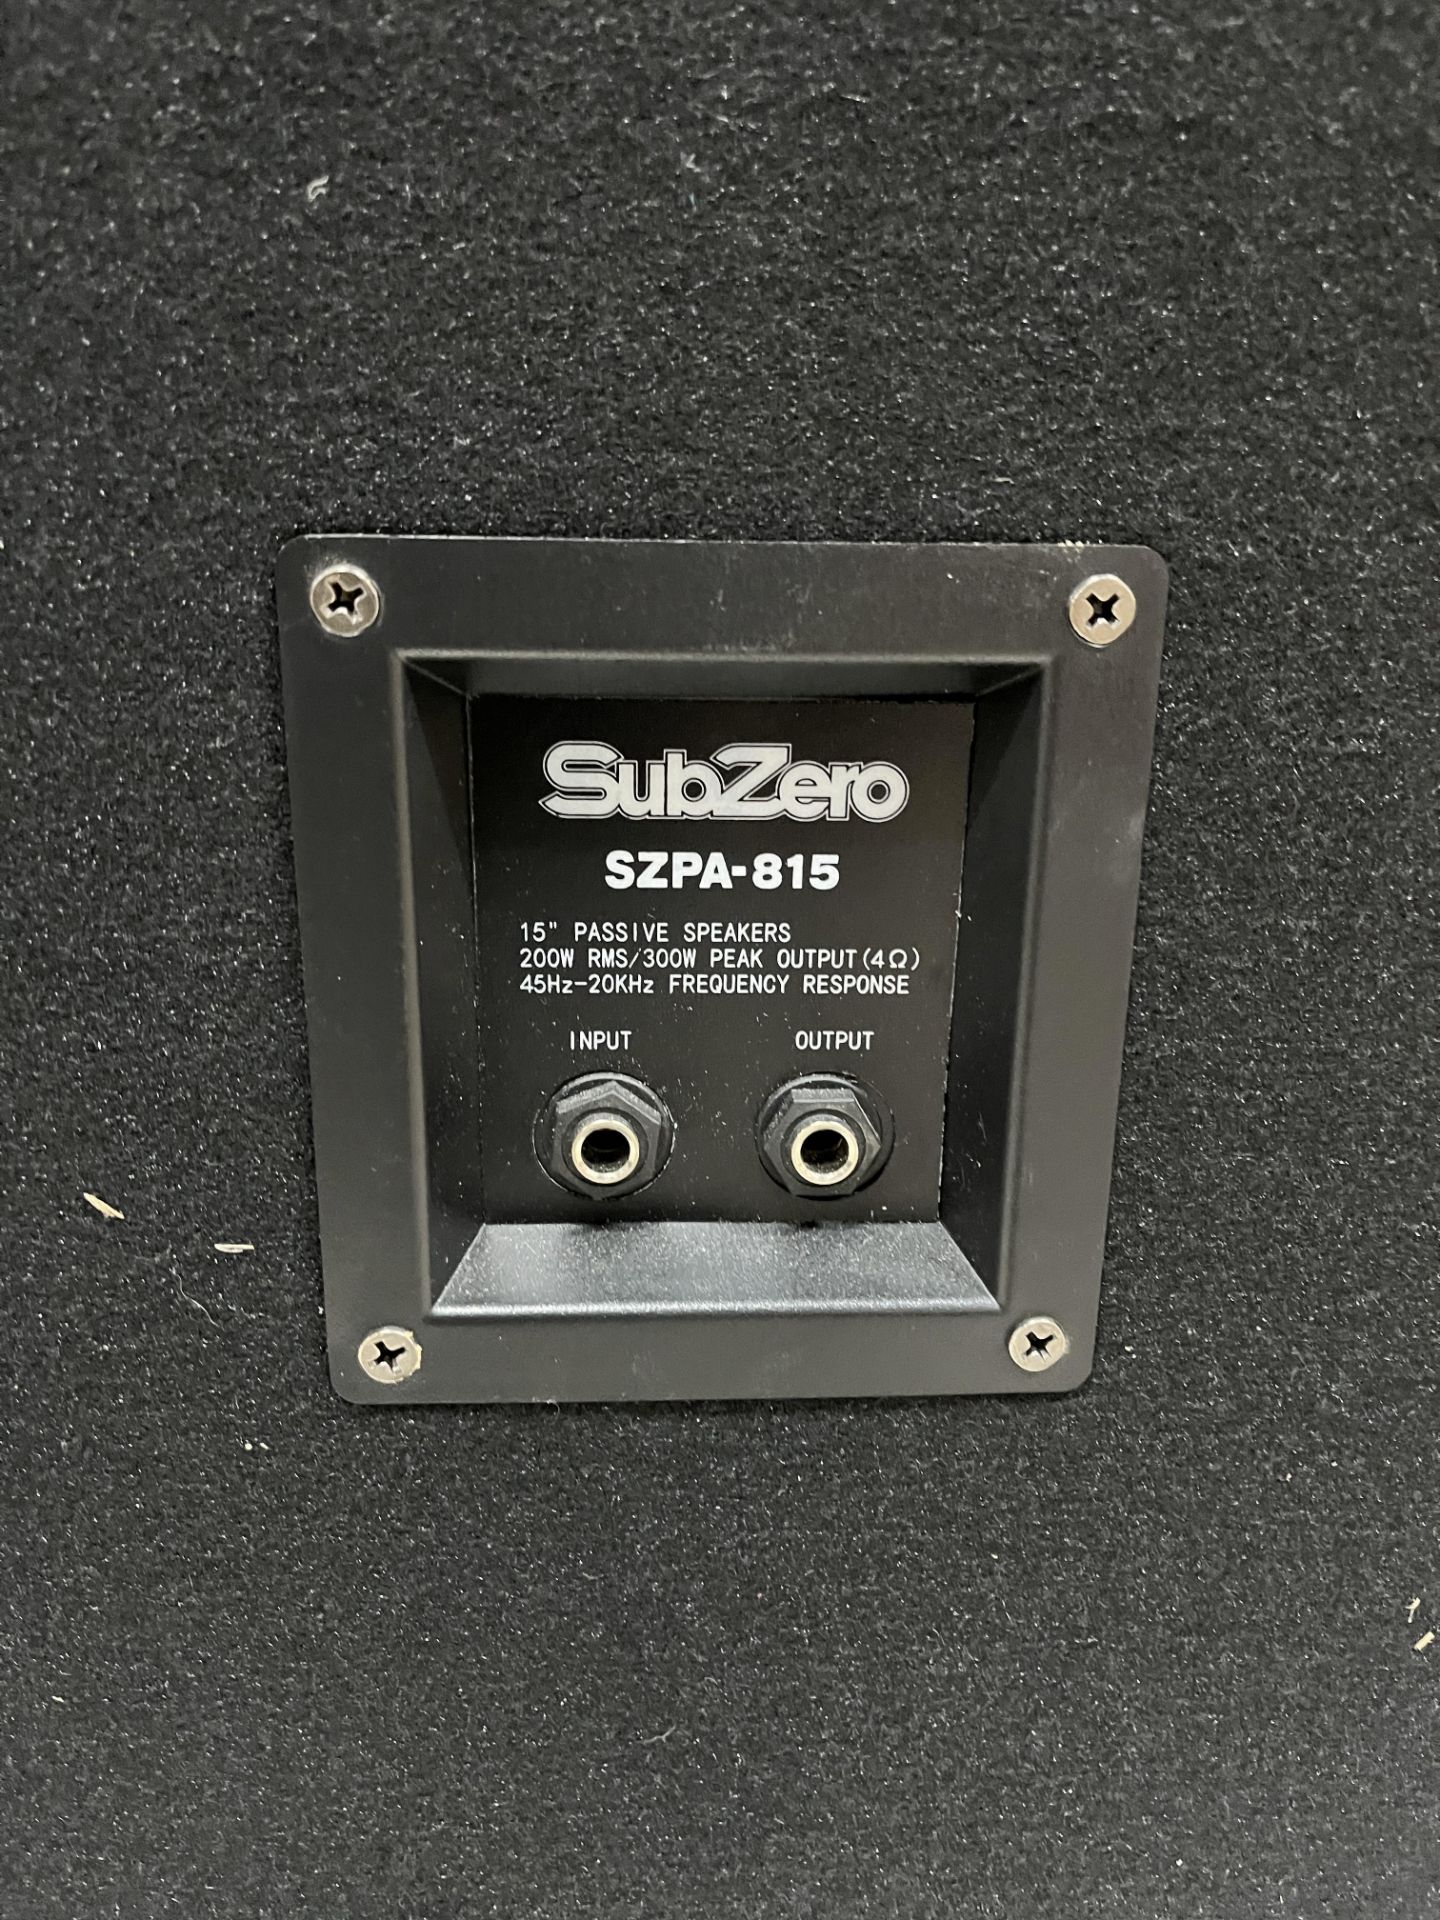 2 x SubZero SZPA-815 15" Passive Speakers - Image 6 of 6